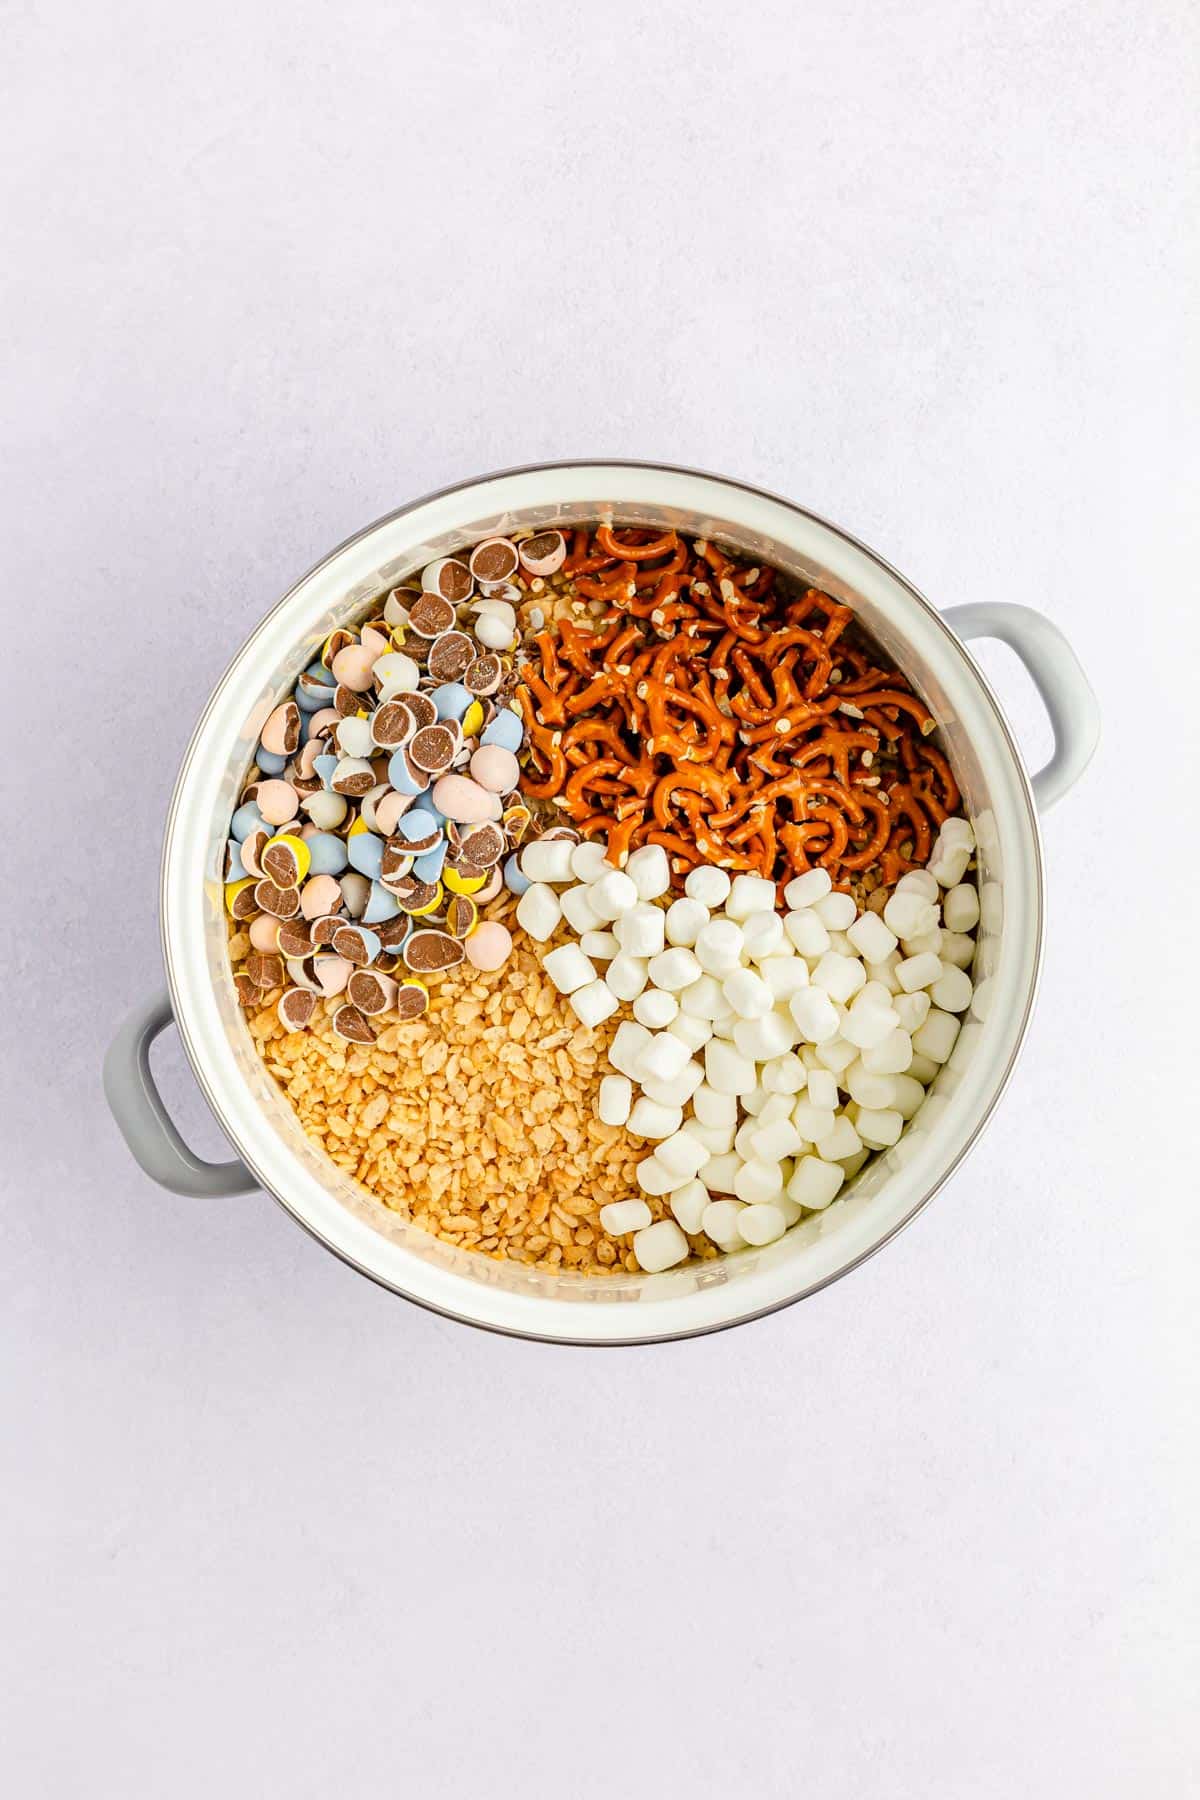 Adding rice krispie cereal, mini pretzels, mini eggs, and marshmallows to make rice krispie treats.